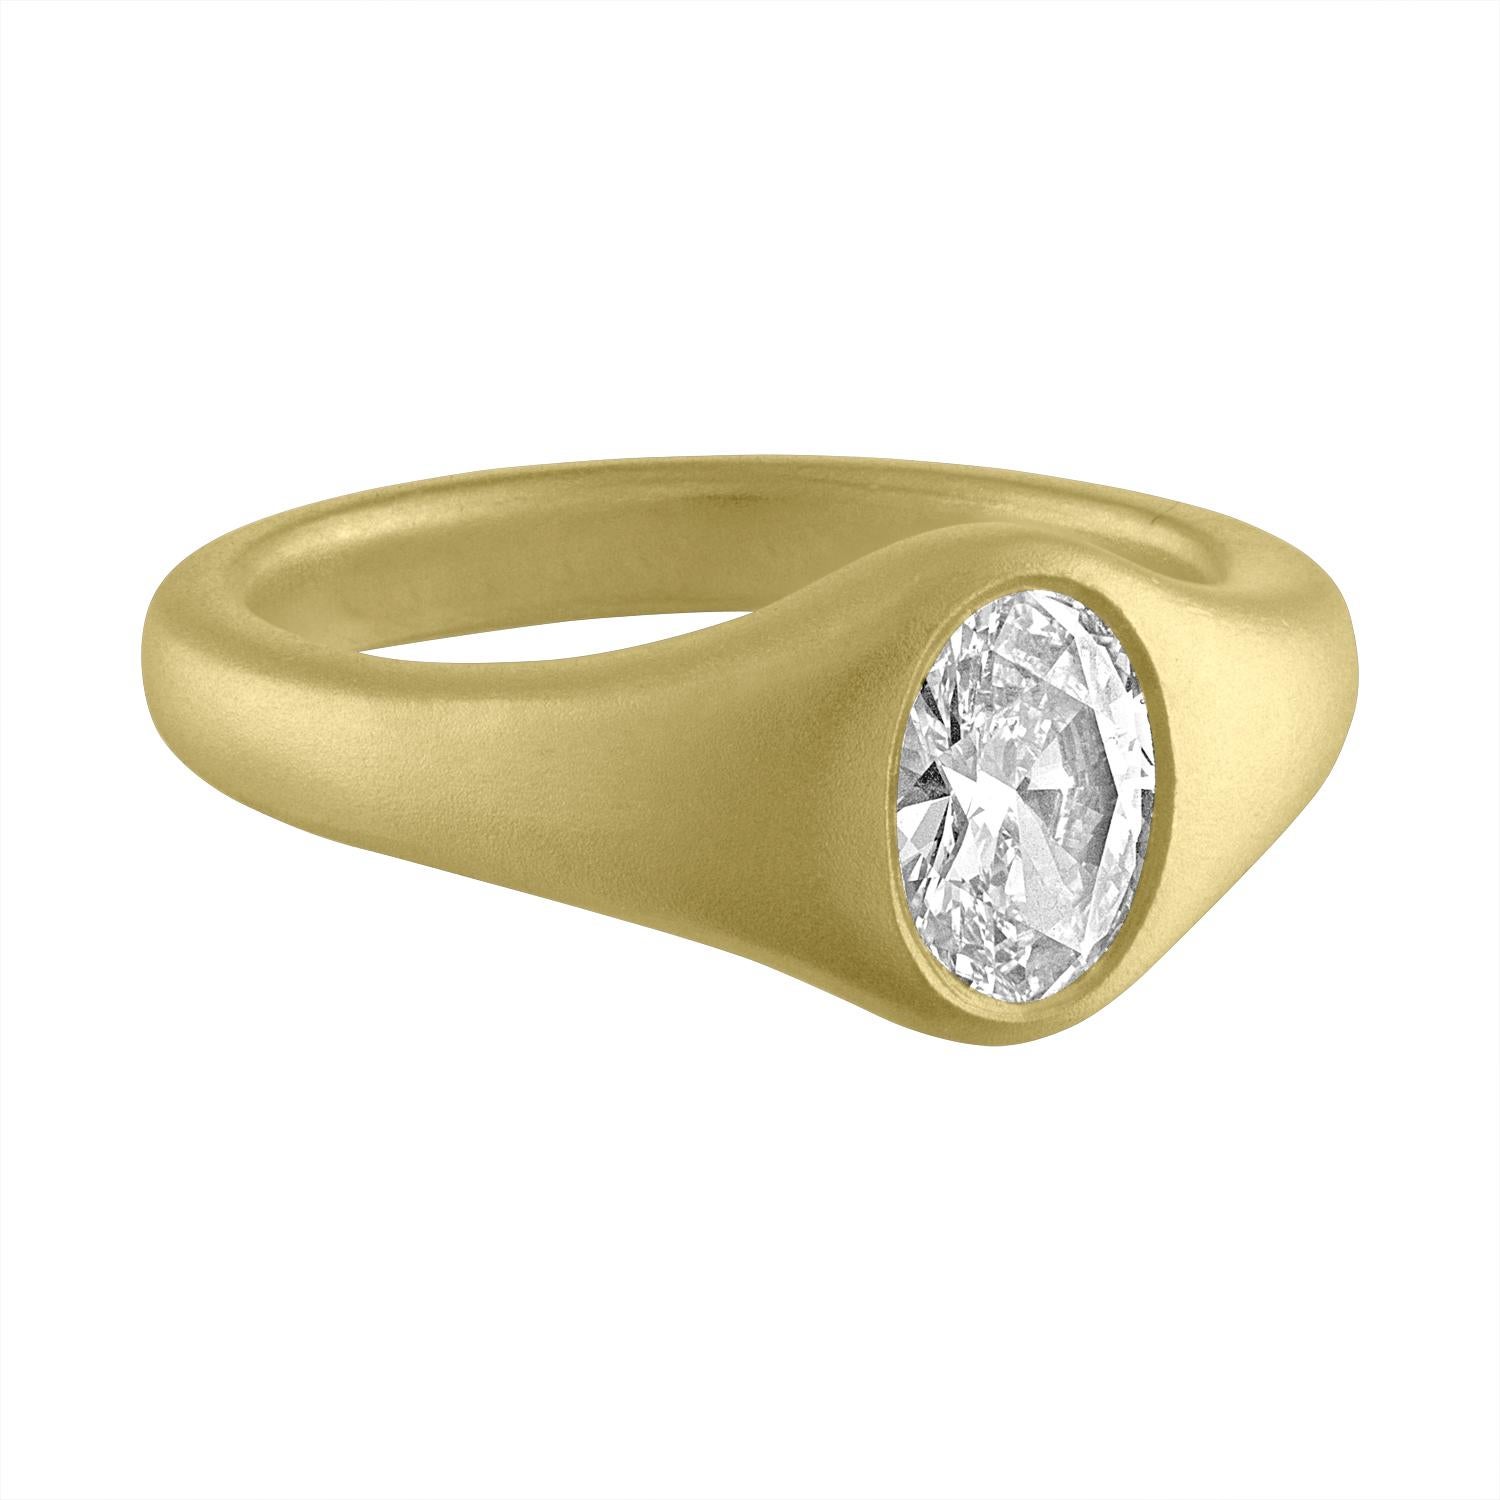 18k Green Gold Diamond Ring
Diamond weight .90ct
Size 6  3/4